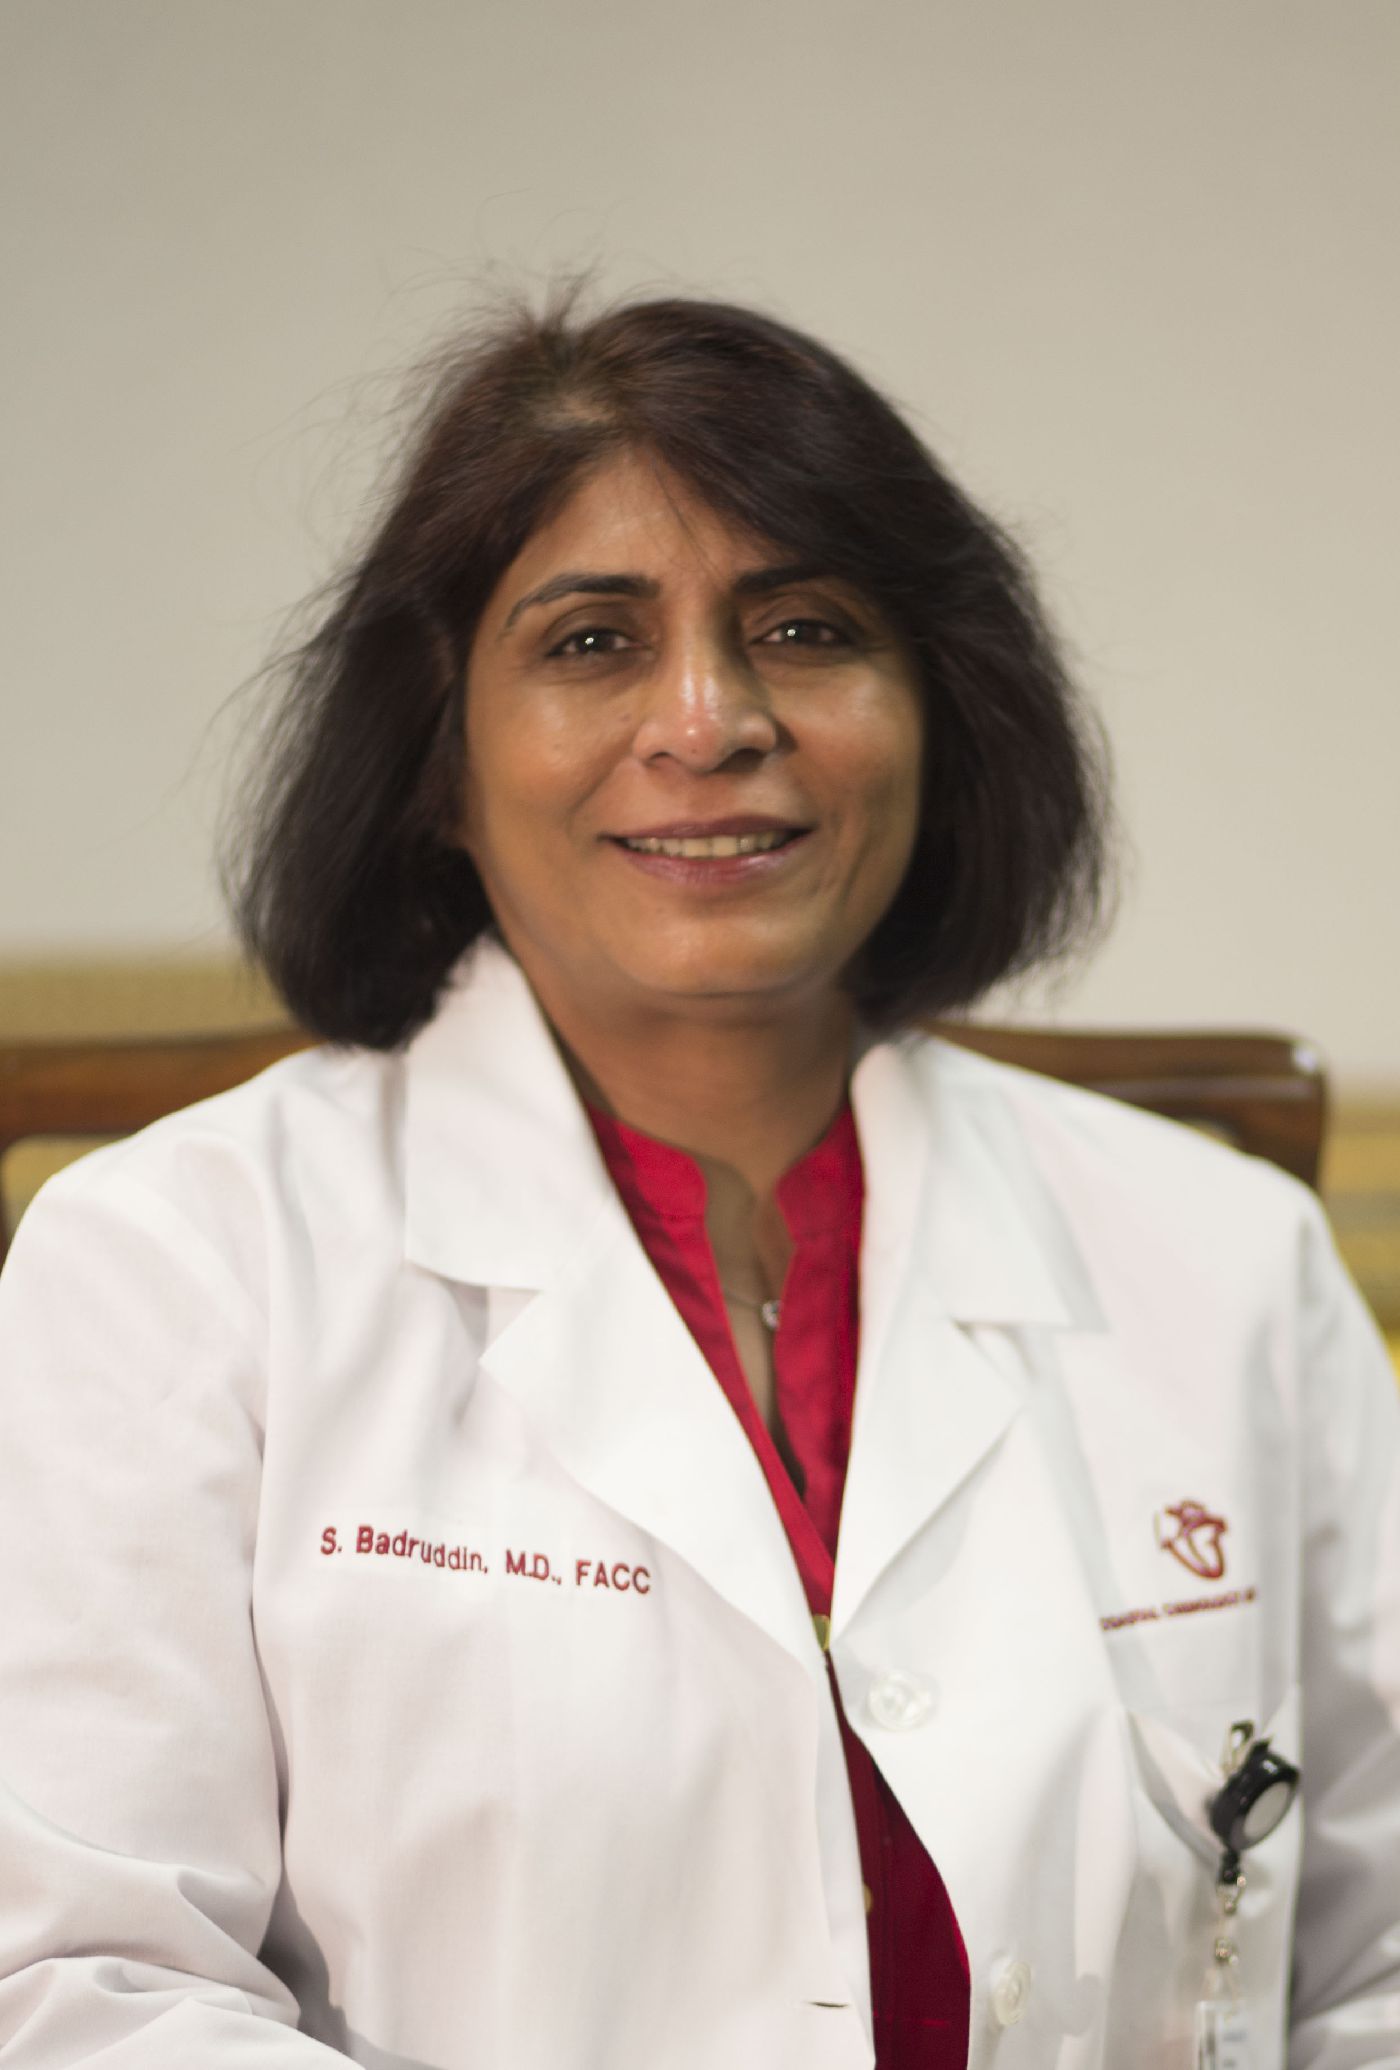 Dr. Badruddin - Cardiologist at Coastal Cardiology Association